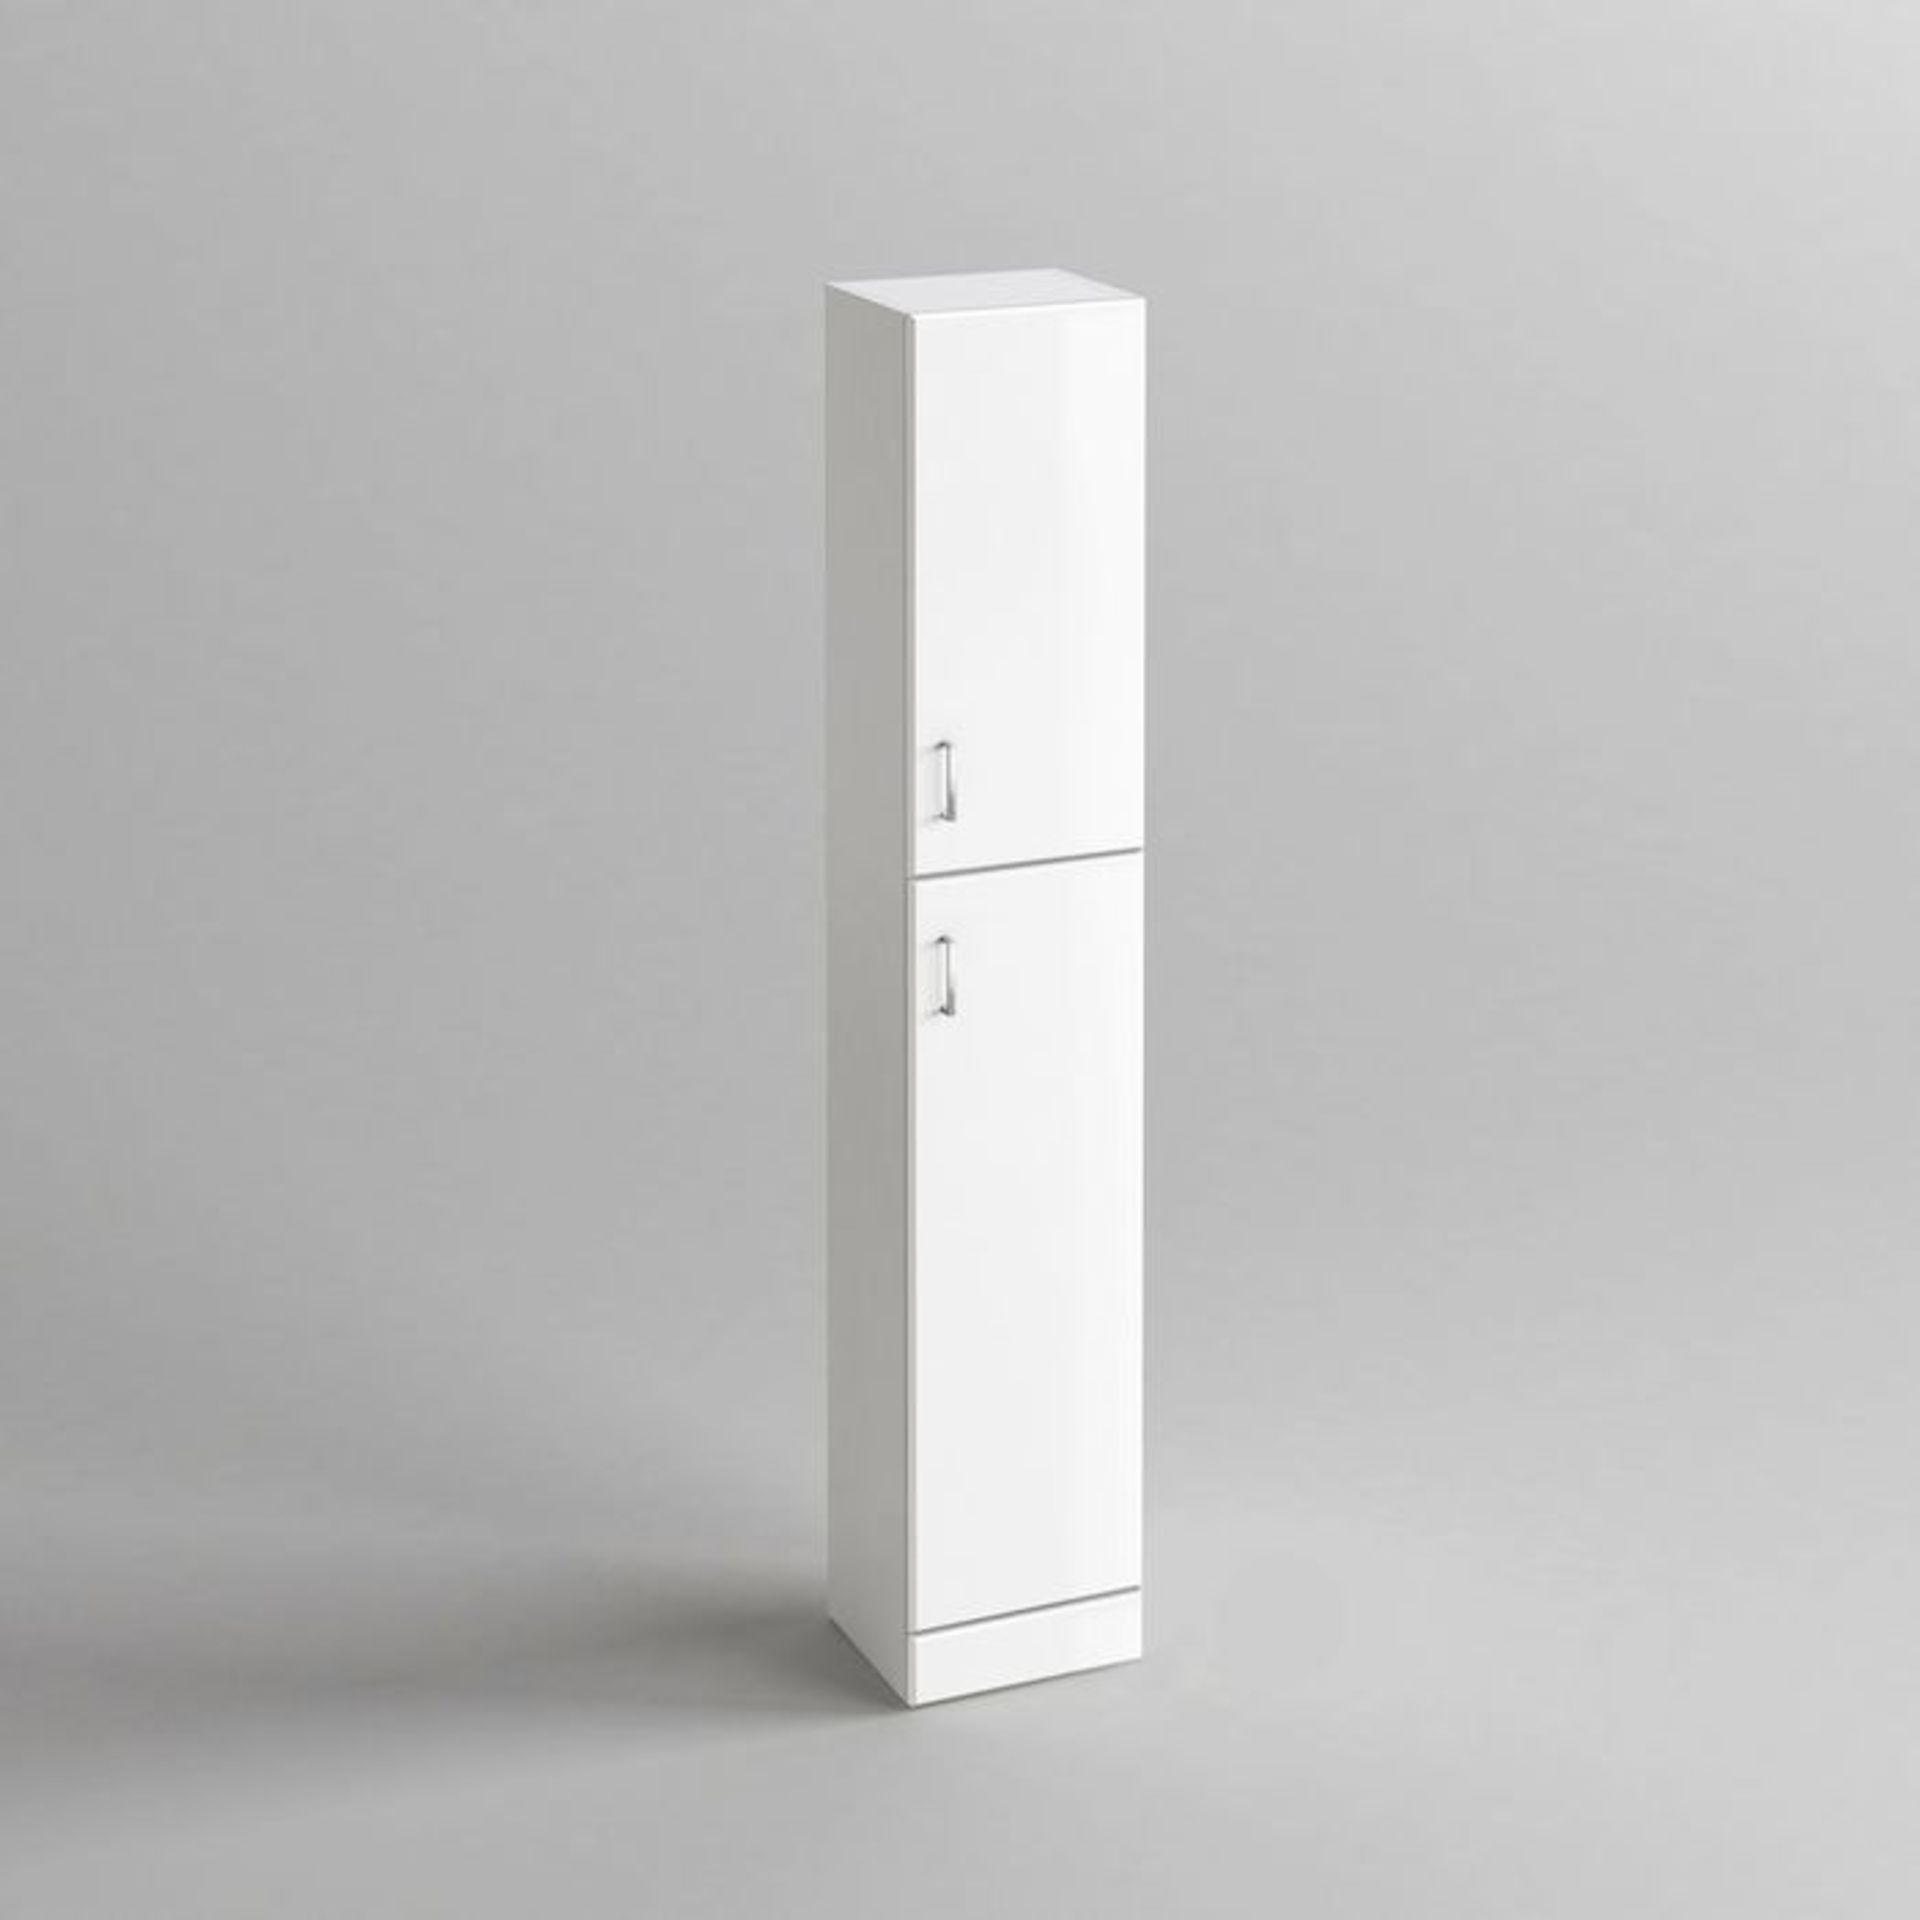 (MC37) 1900x300mm Quartz Gloss White Tall Storage Cabinet - Floor Standing. RRP £299.99. Pristine - Image 3 of 3